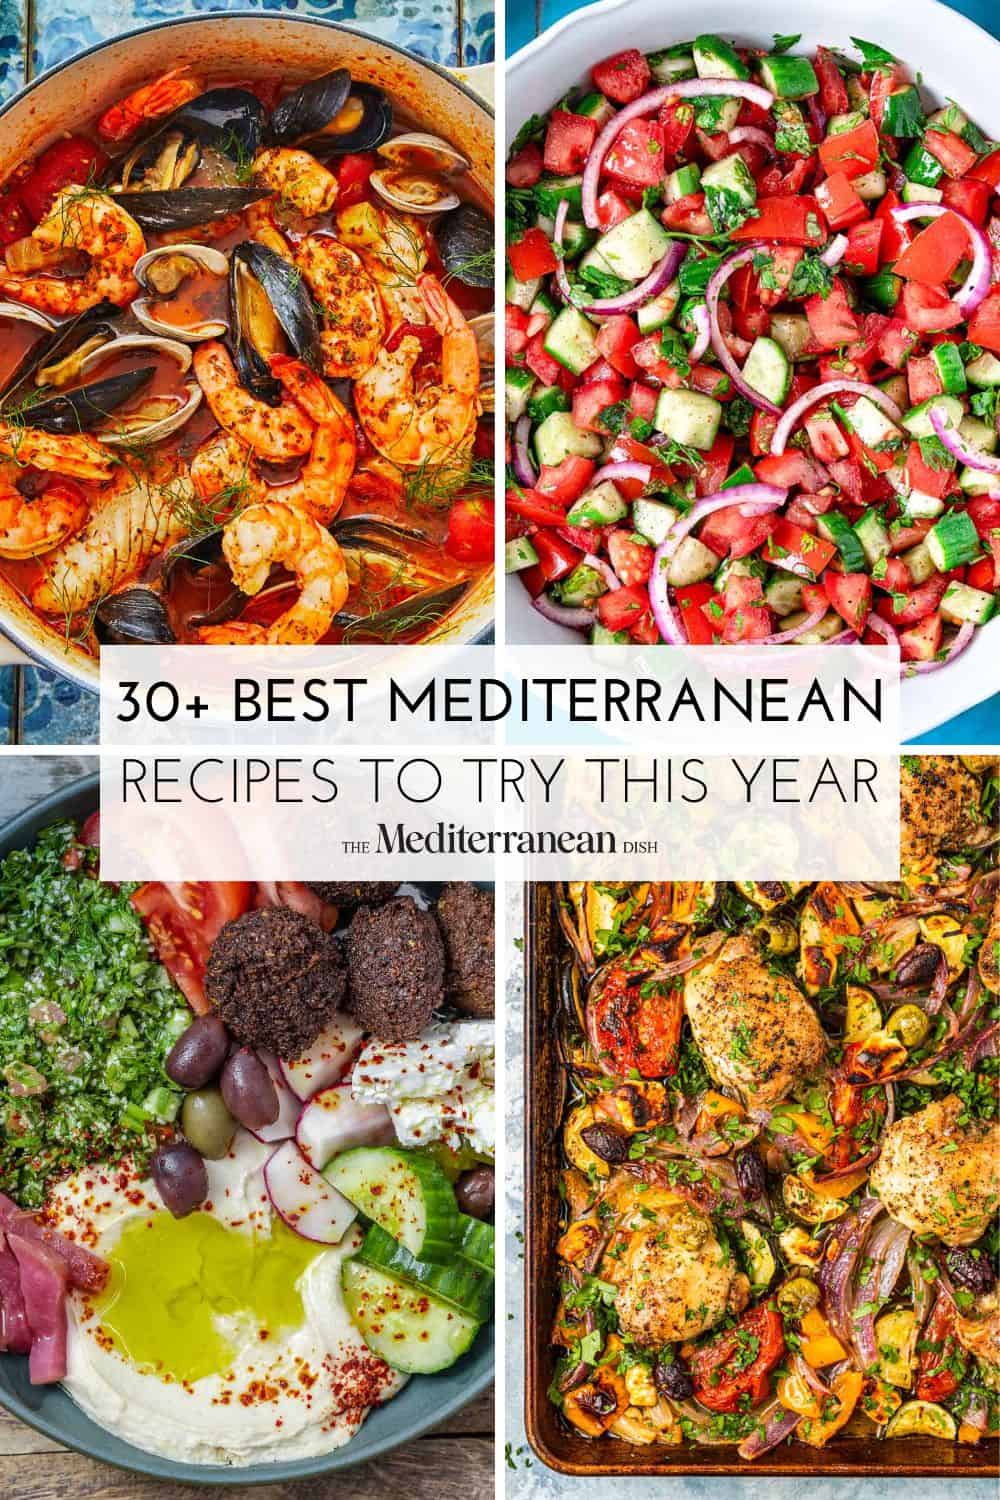 Best Mediterranean Diet Meal Plan for Beginners - The